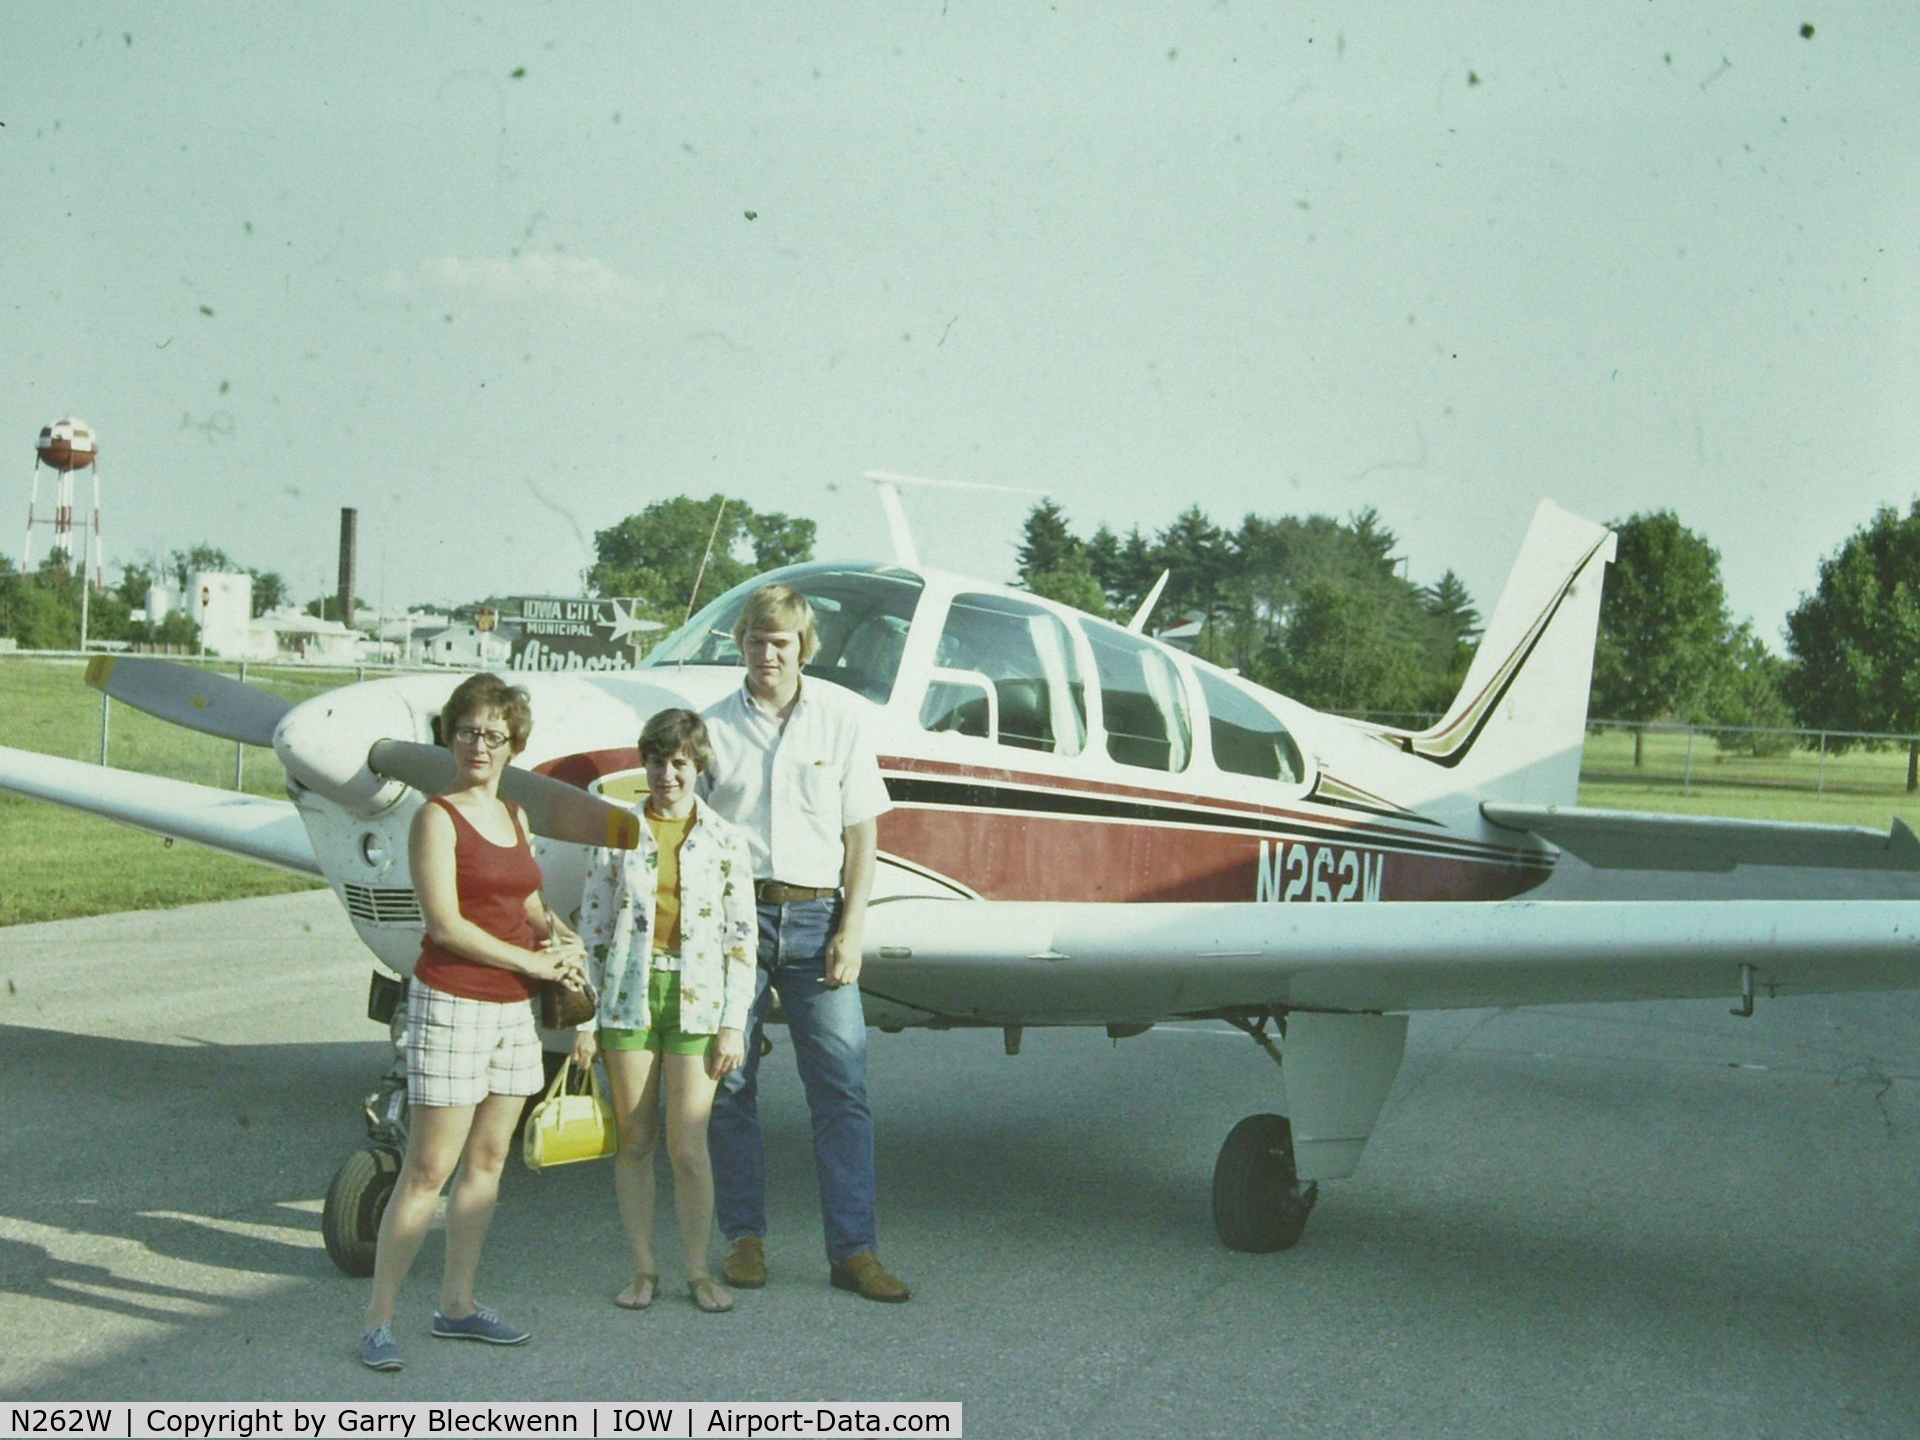 N262W, 1966 Beech 35-C33 Debonair C/N CD-1031, Iowa City Airport
Pamela Bleckwenn
Bert & Kathy Bleckwenn
Owner/Pilot - Garry Bleckwenn